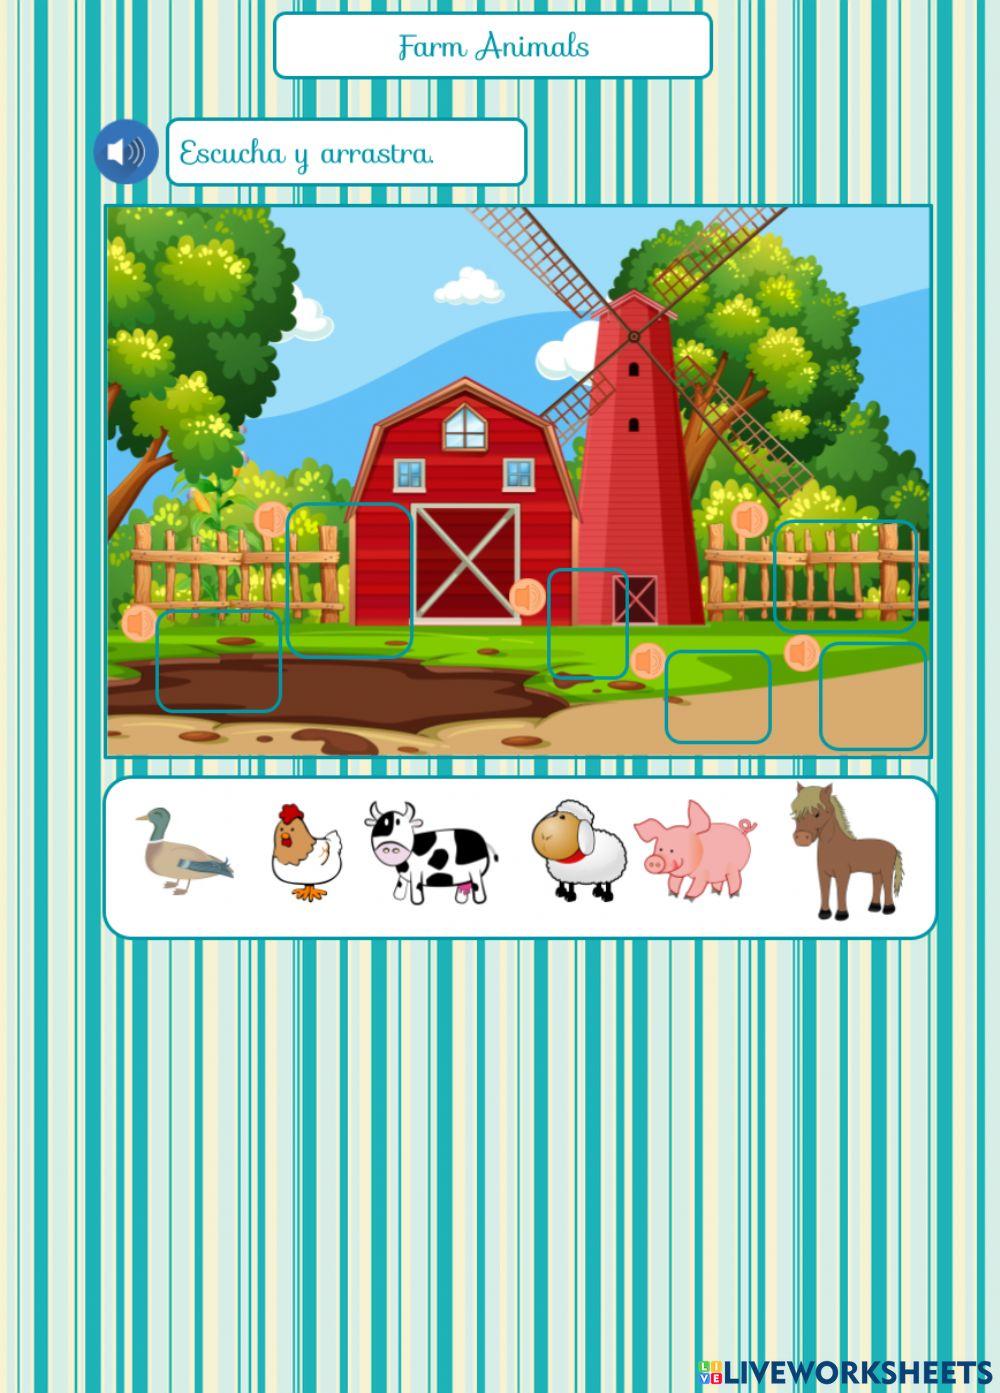 Farm animals